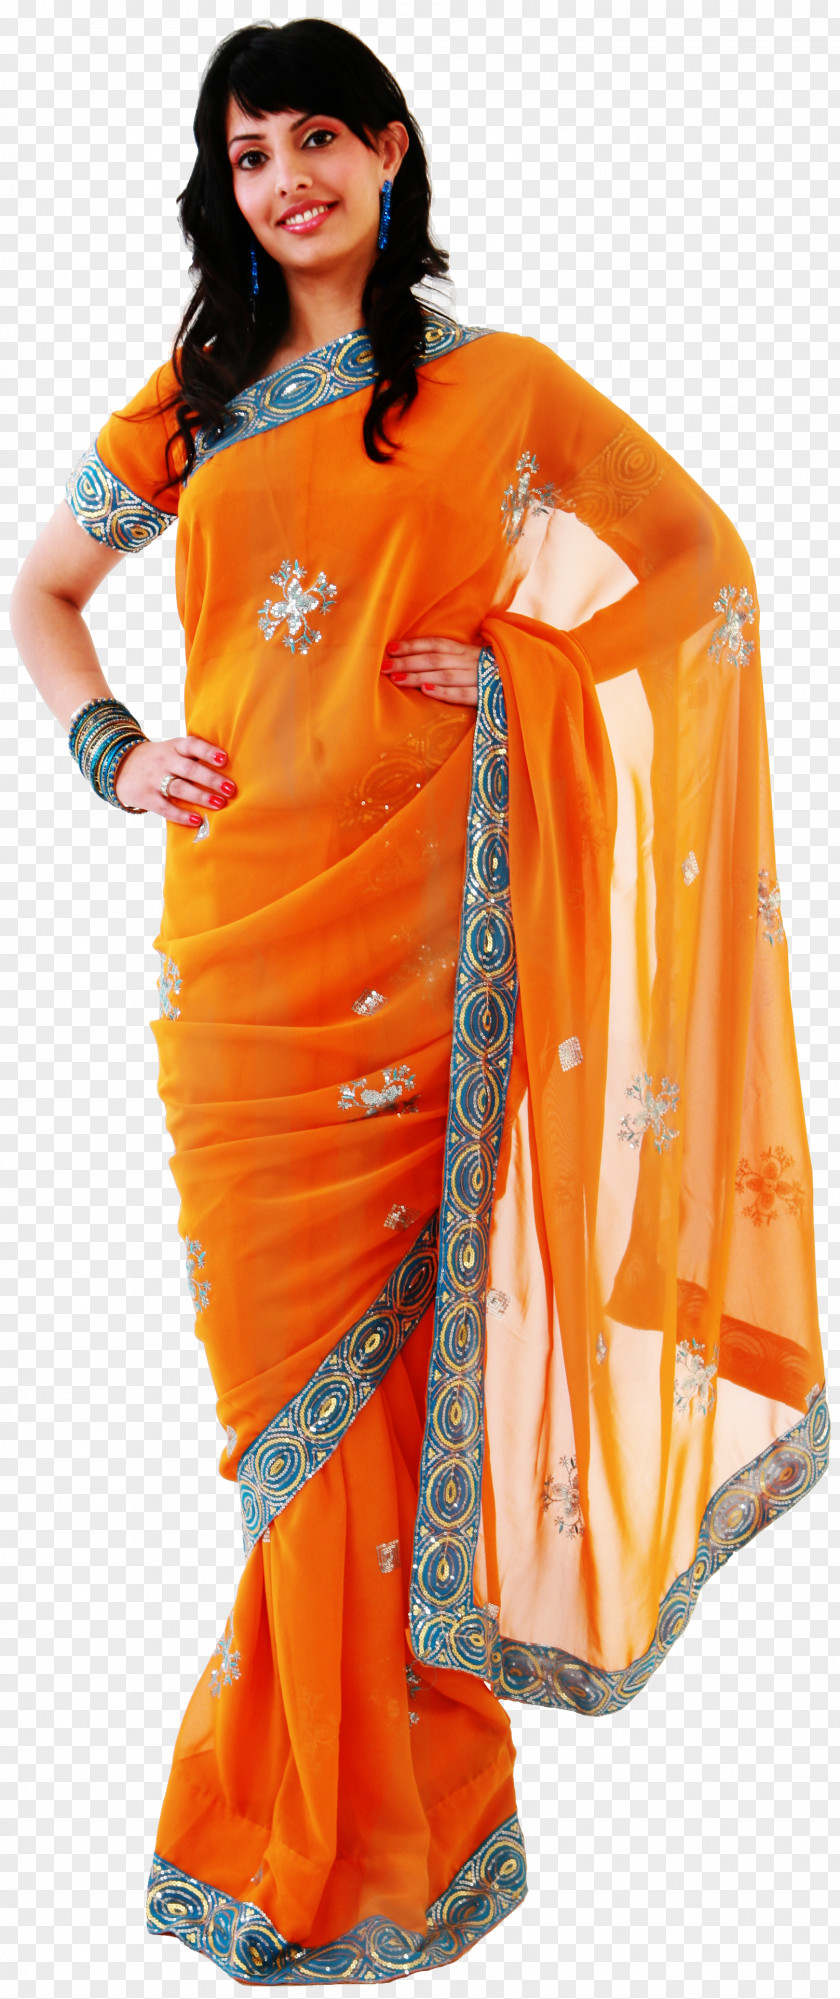 Woman Sari Shoulder Orange S.A. Costume PNG